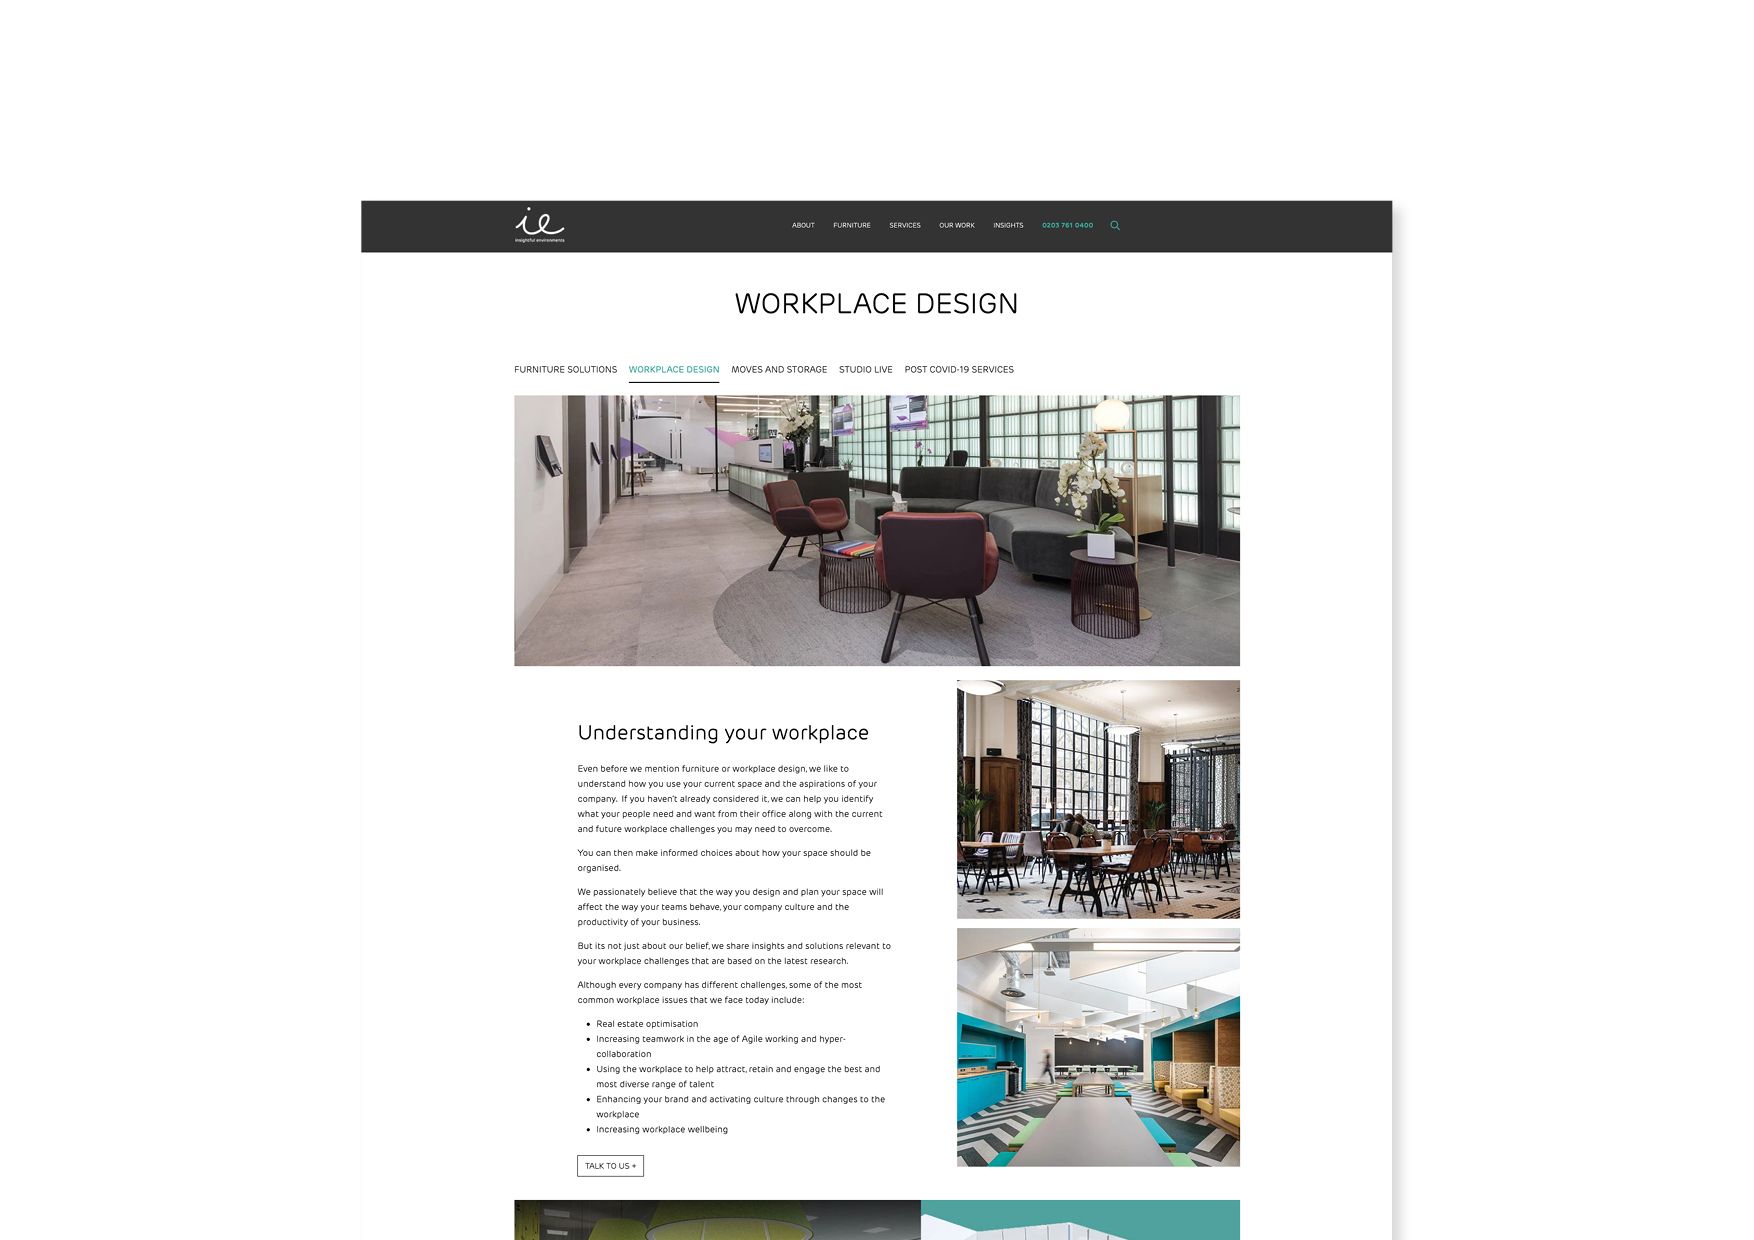 insightful-environments-web-print-digital-ebooks-equinet-media4